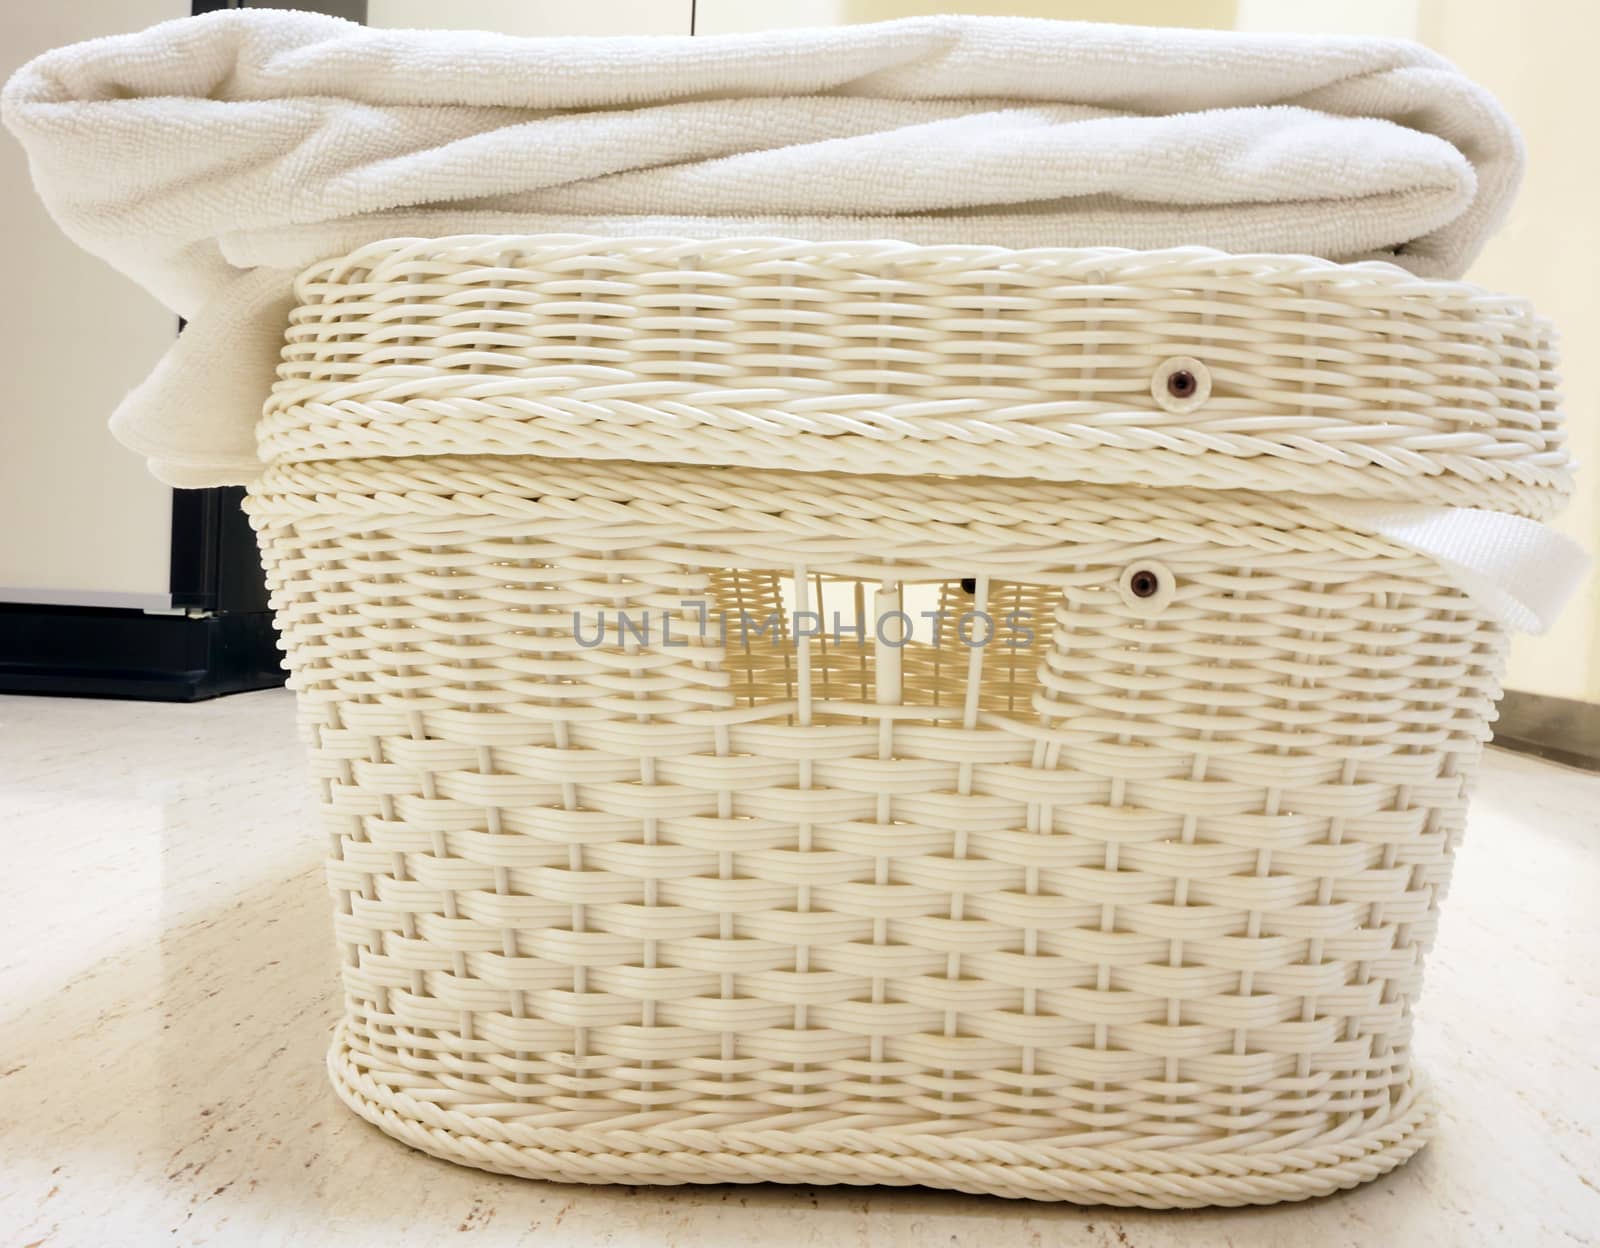 White towel on basket by ninun